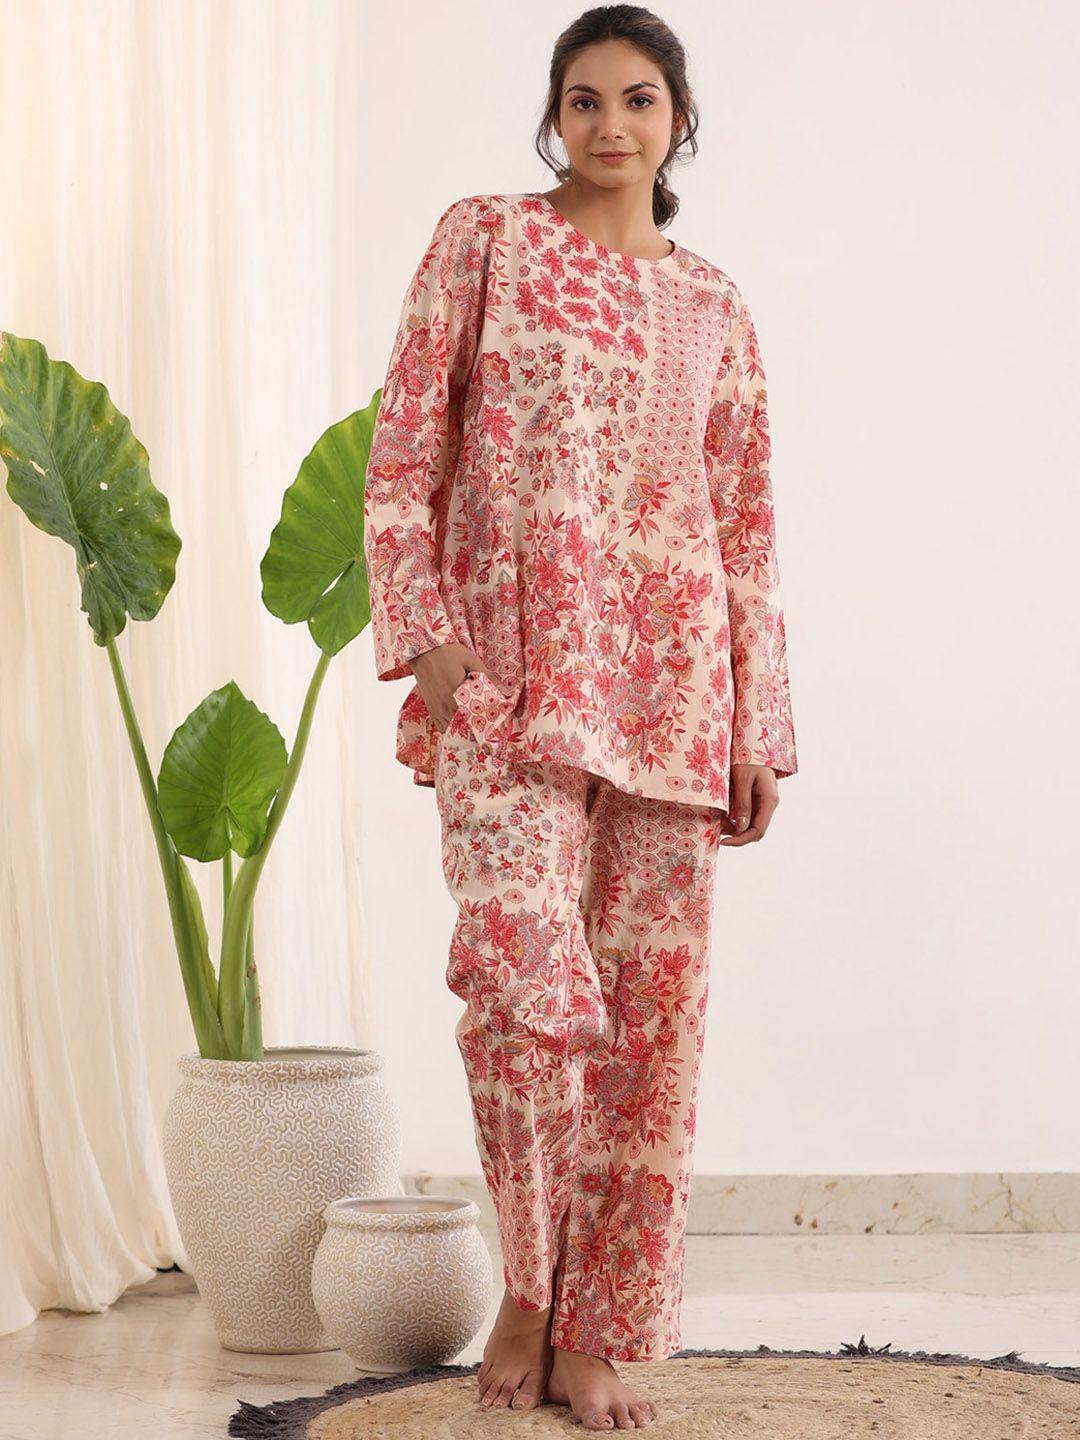 sanskrutihomes floral printed pure cotton night suit